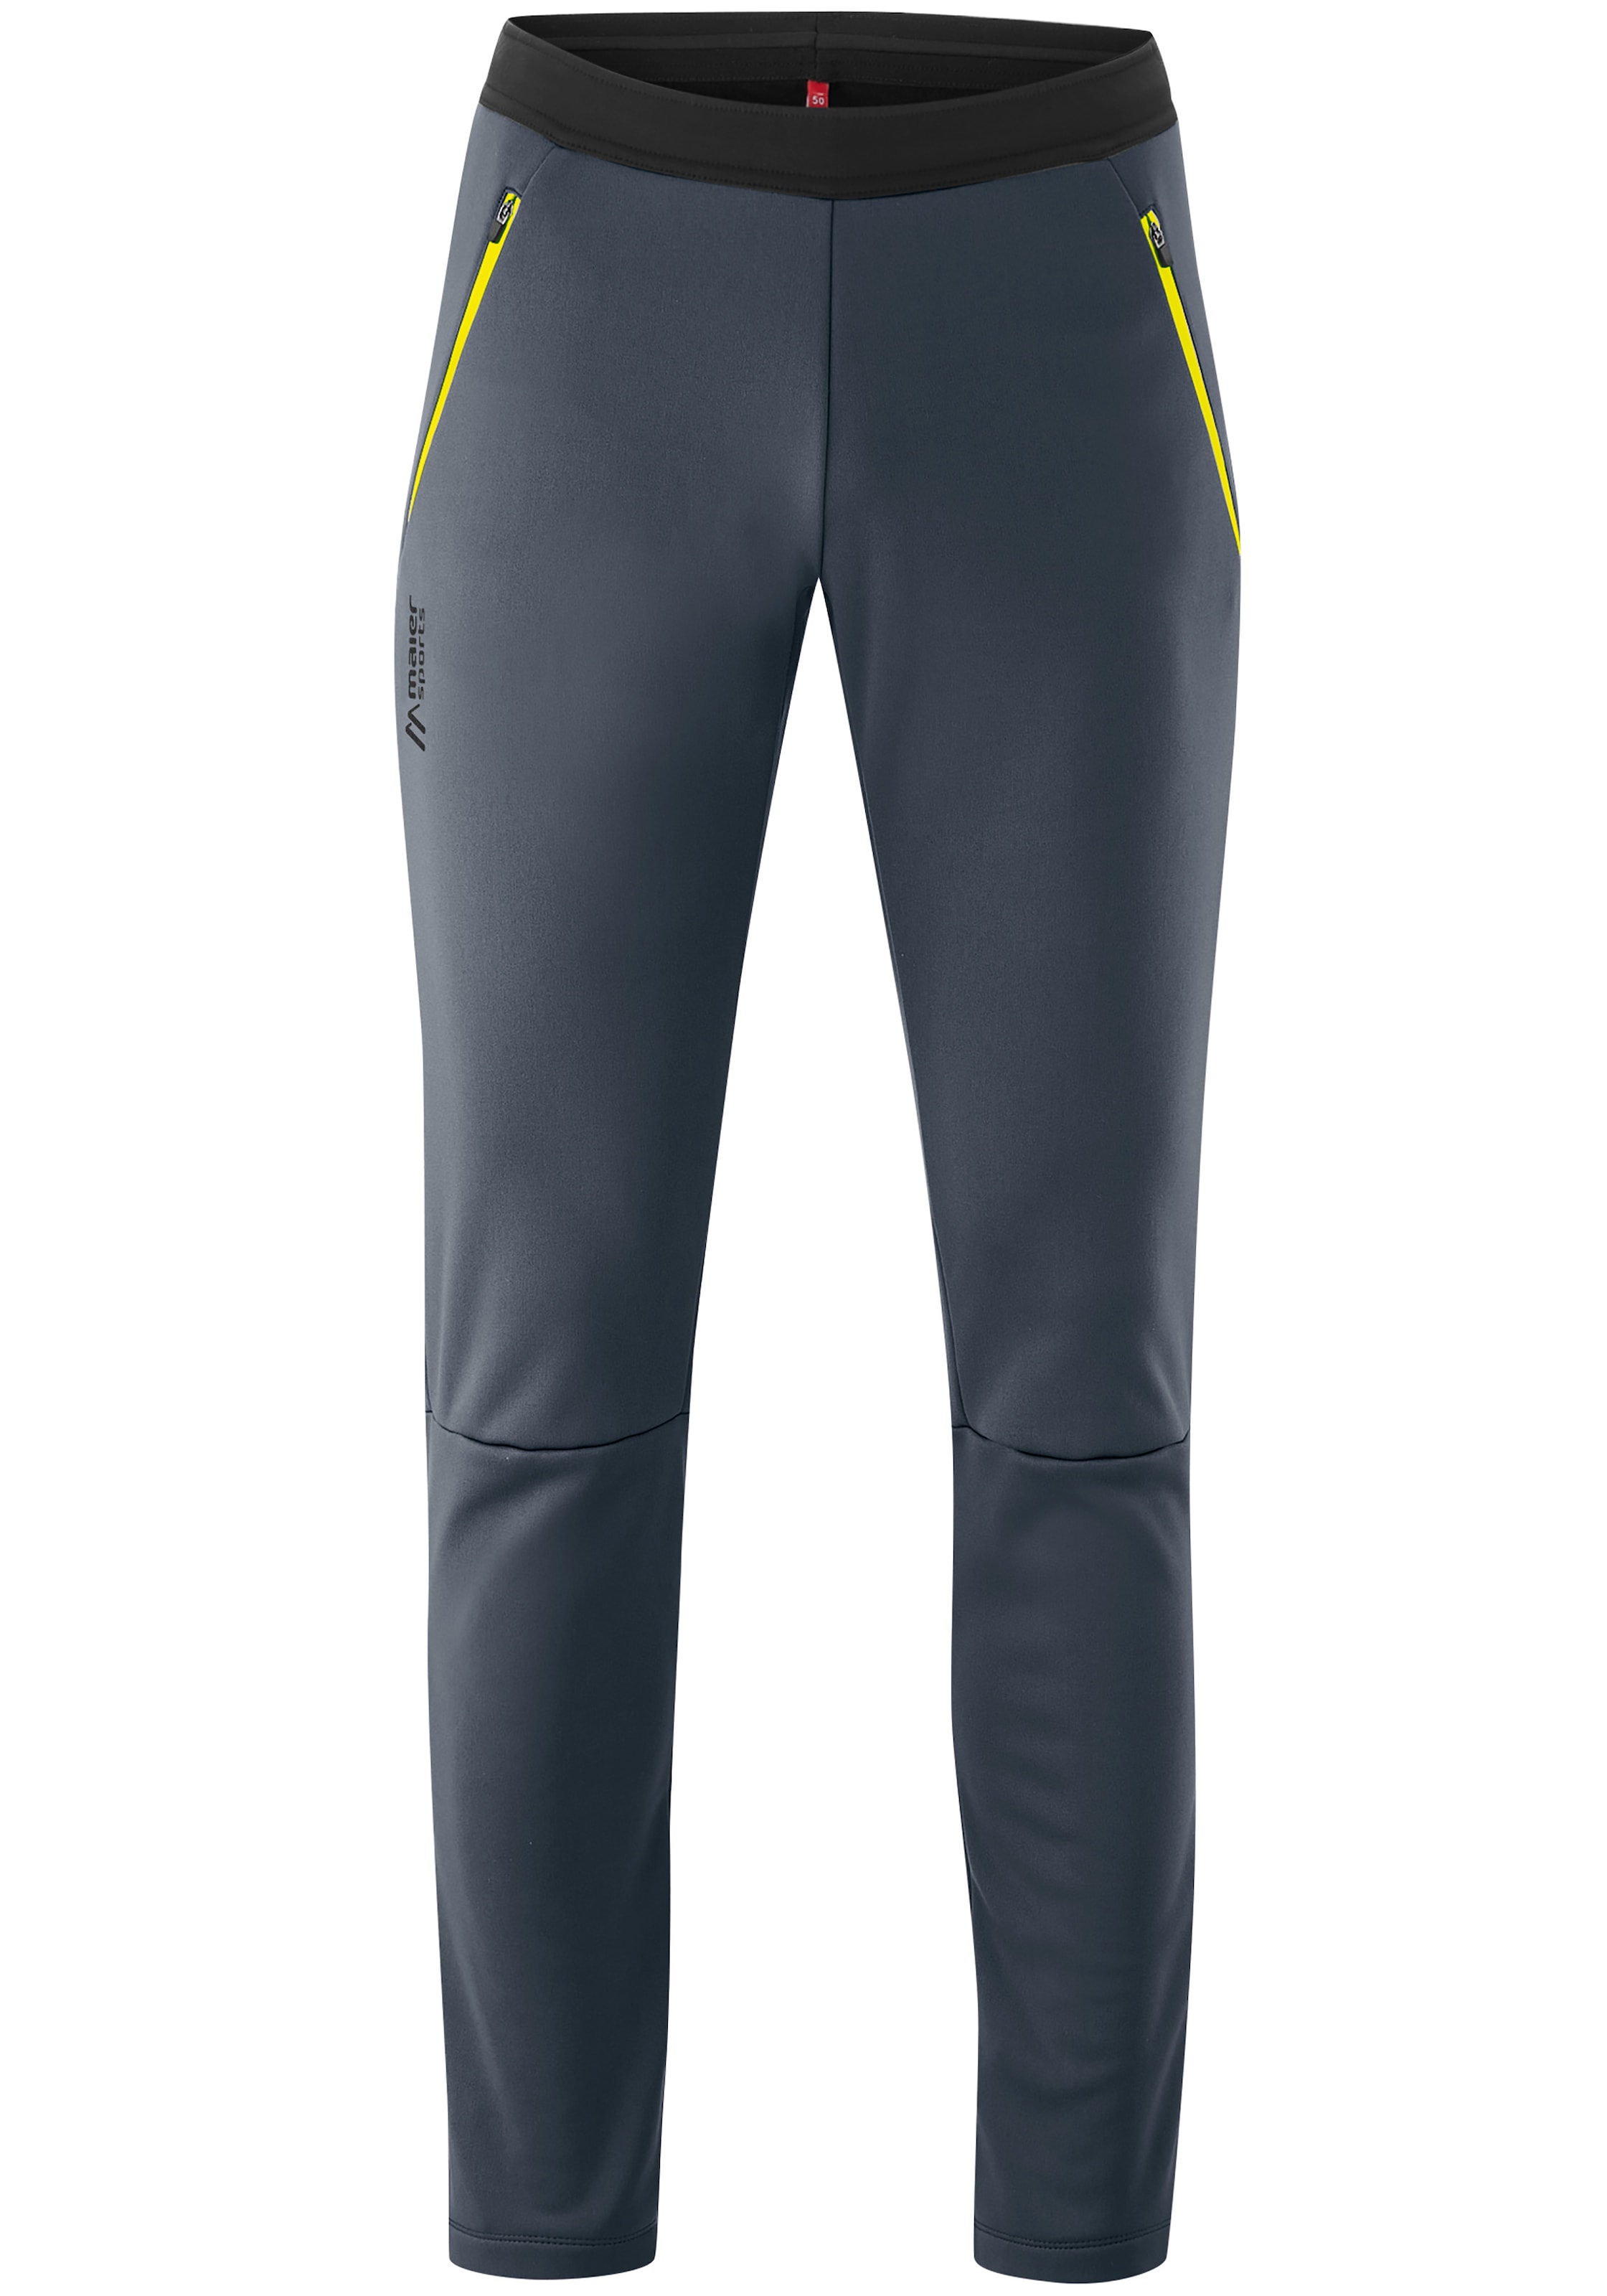 Maier Sports Softshellhose »Malselv Pants M«, komfortable Softshell-Hose in modernen Slim-Fit Schnitt